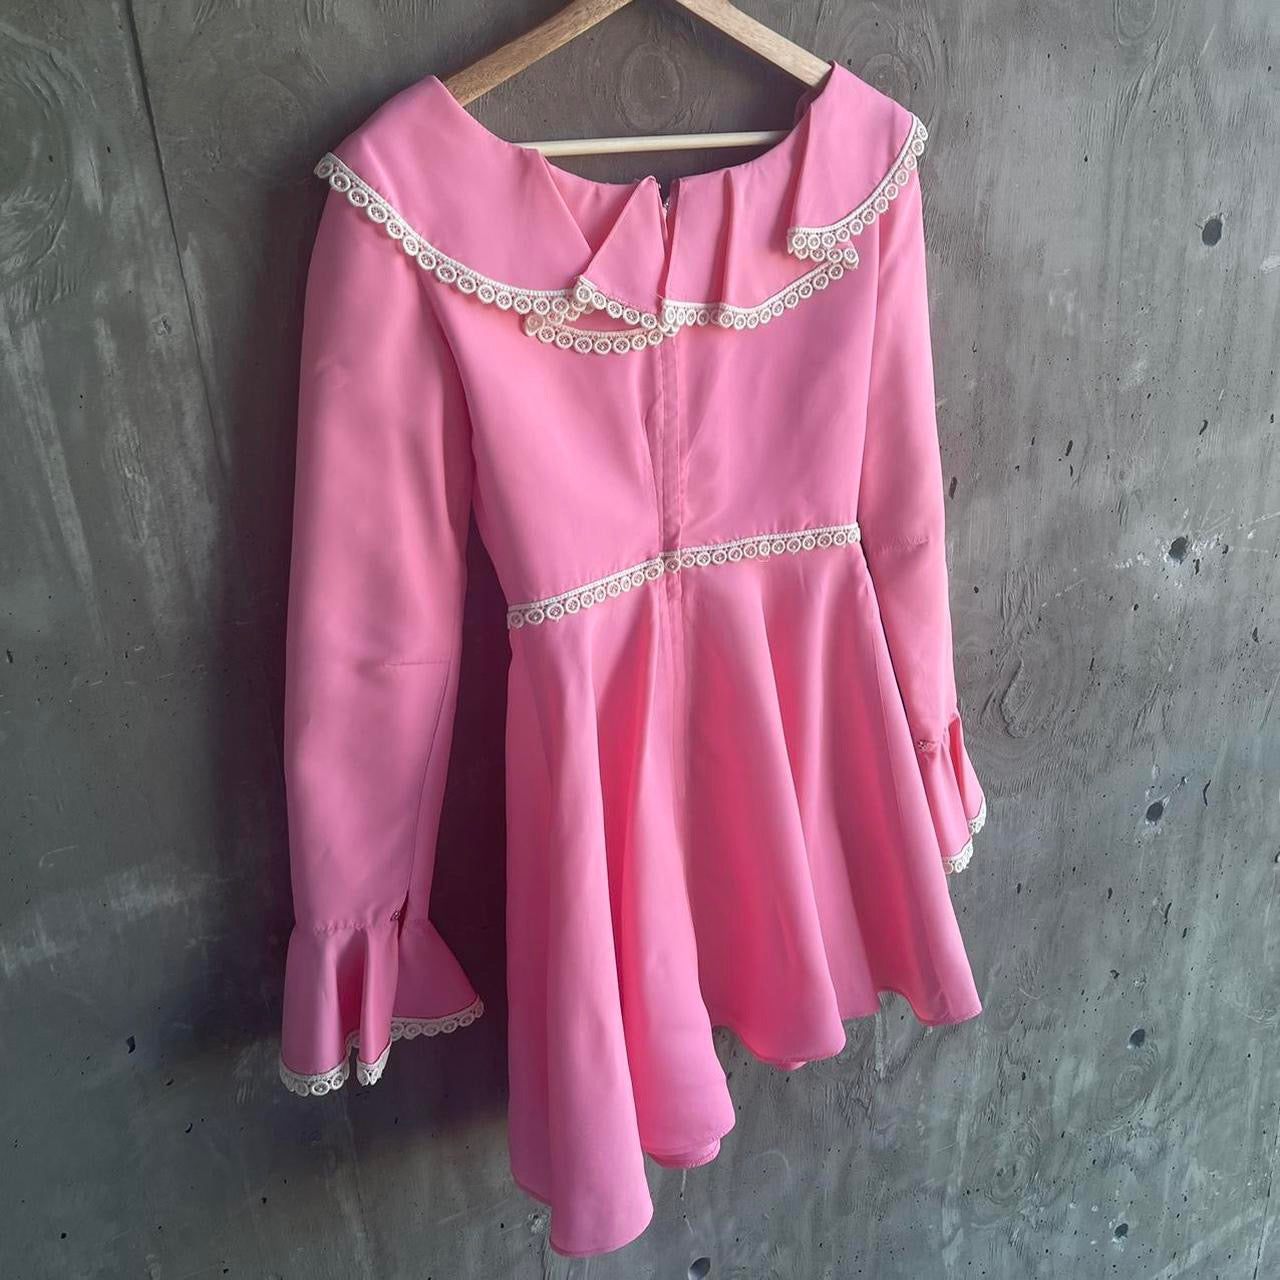 Vintage Prairie Cottagecore Mini Dress in Pink 70’s